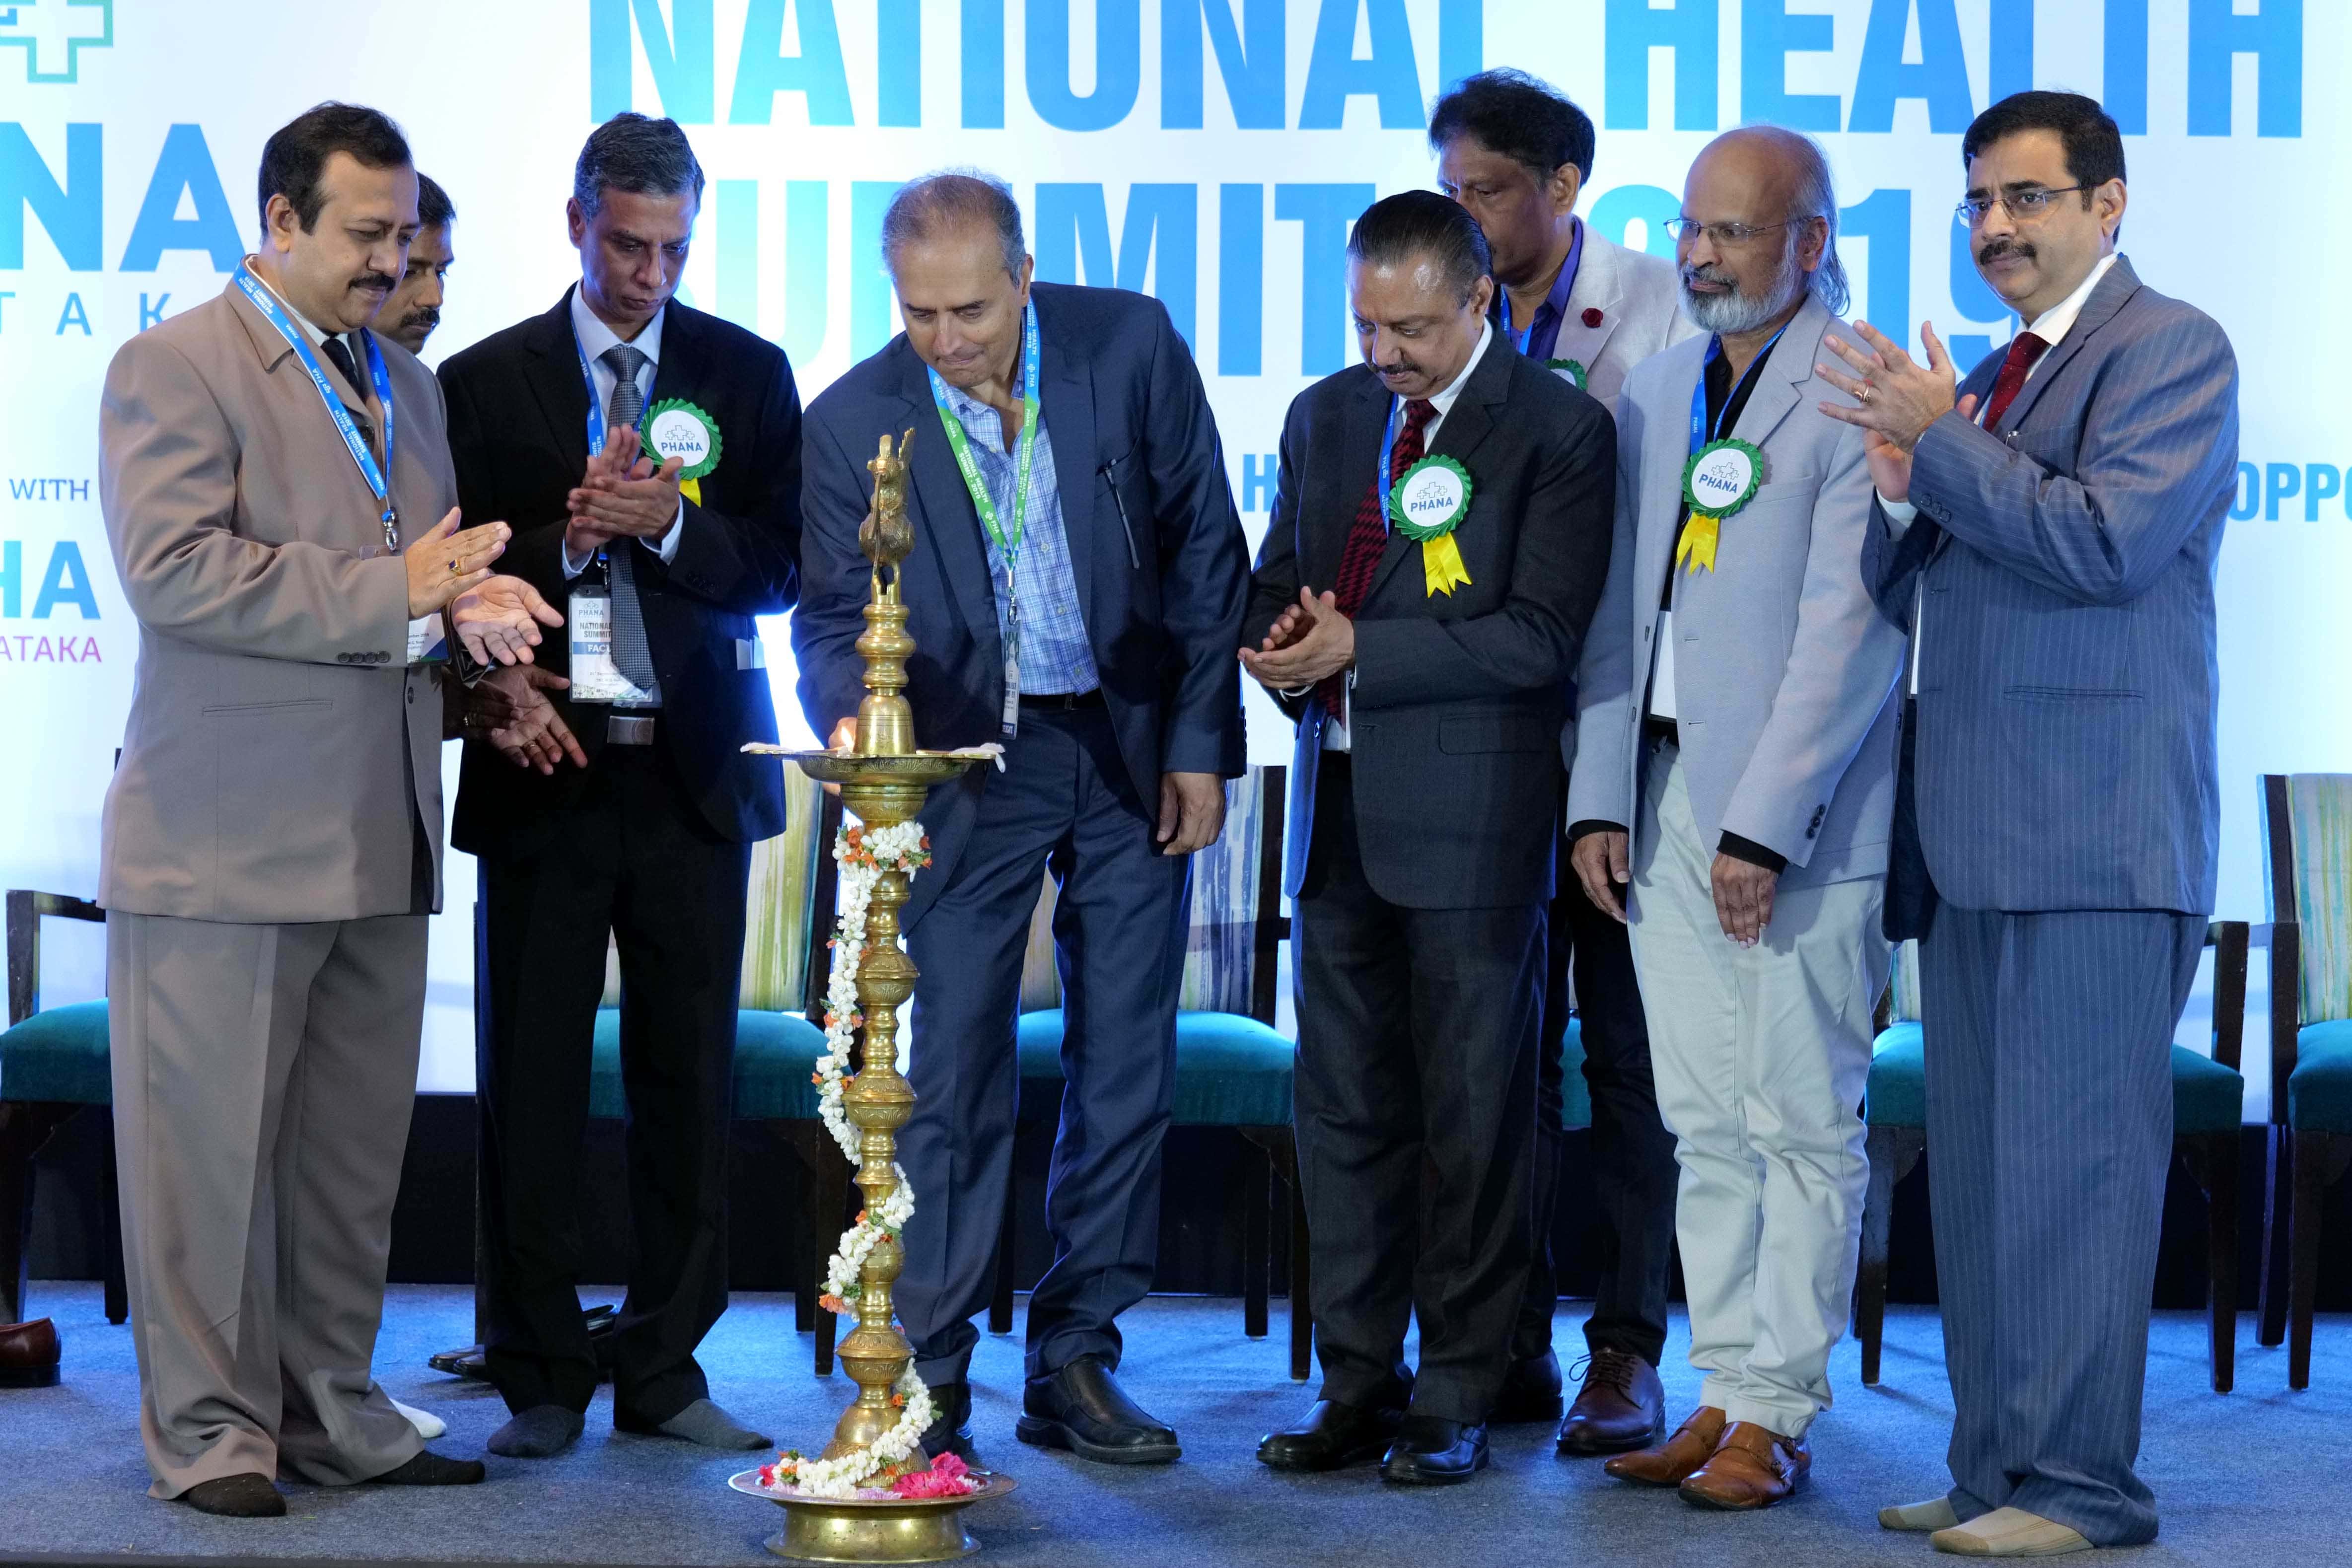 National Health Summit 2019